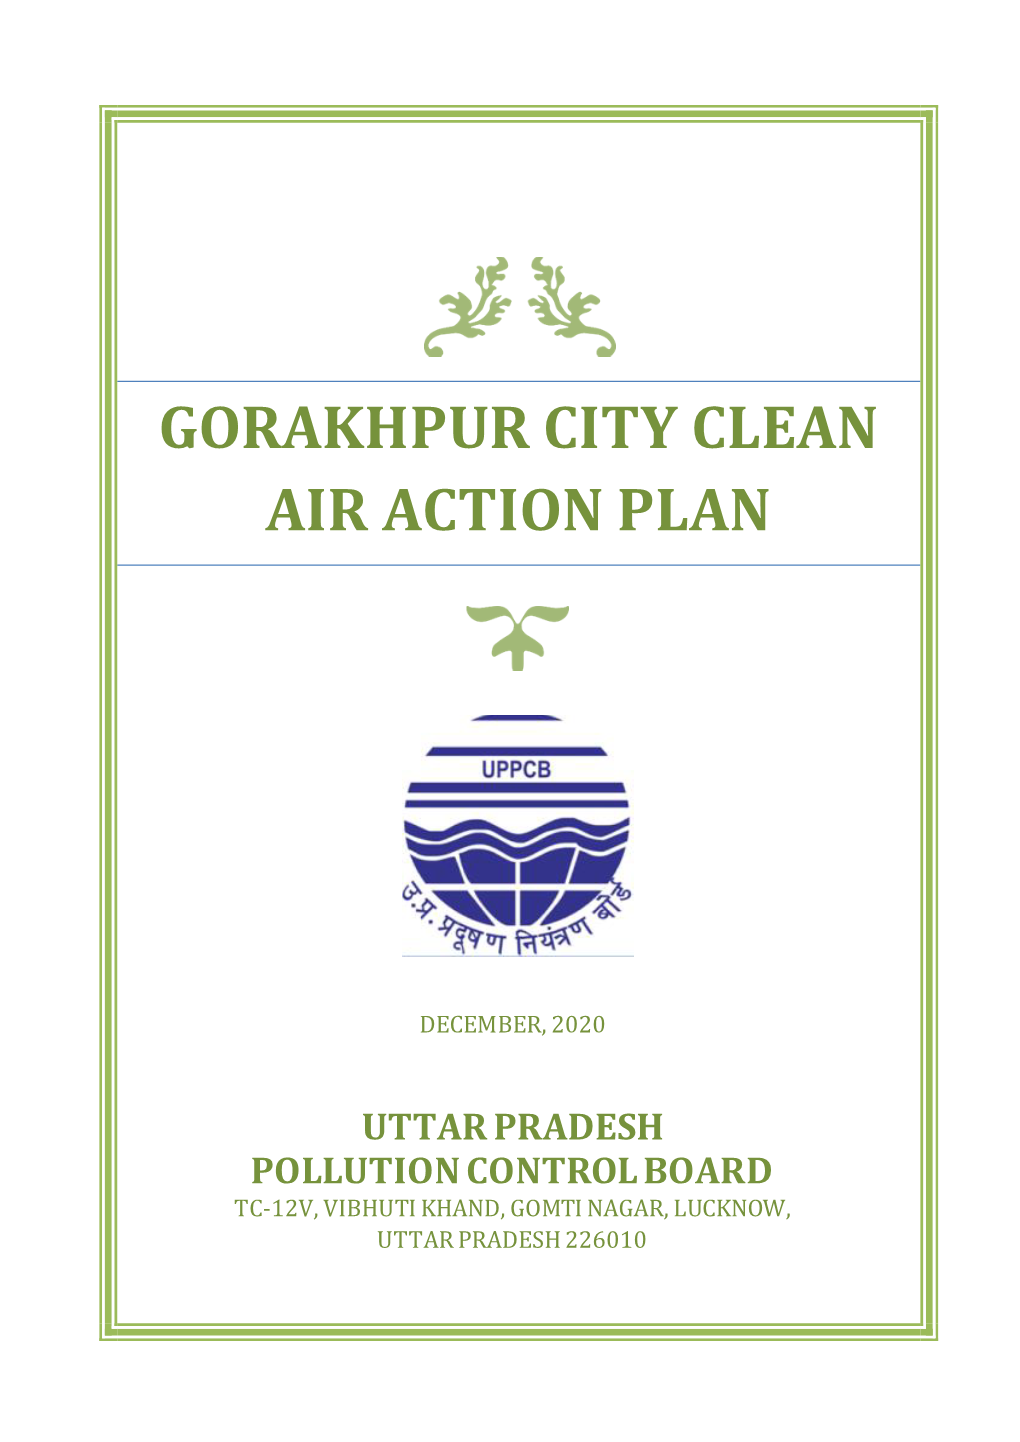 Action Plan for Gorakhpur